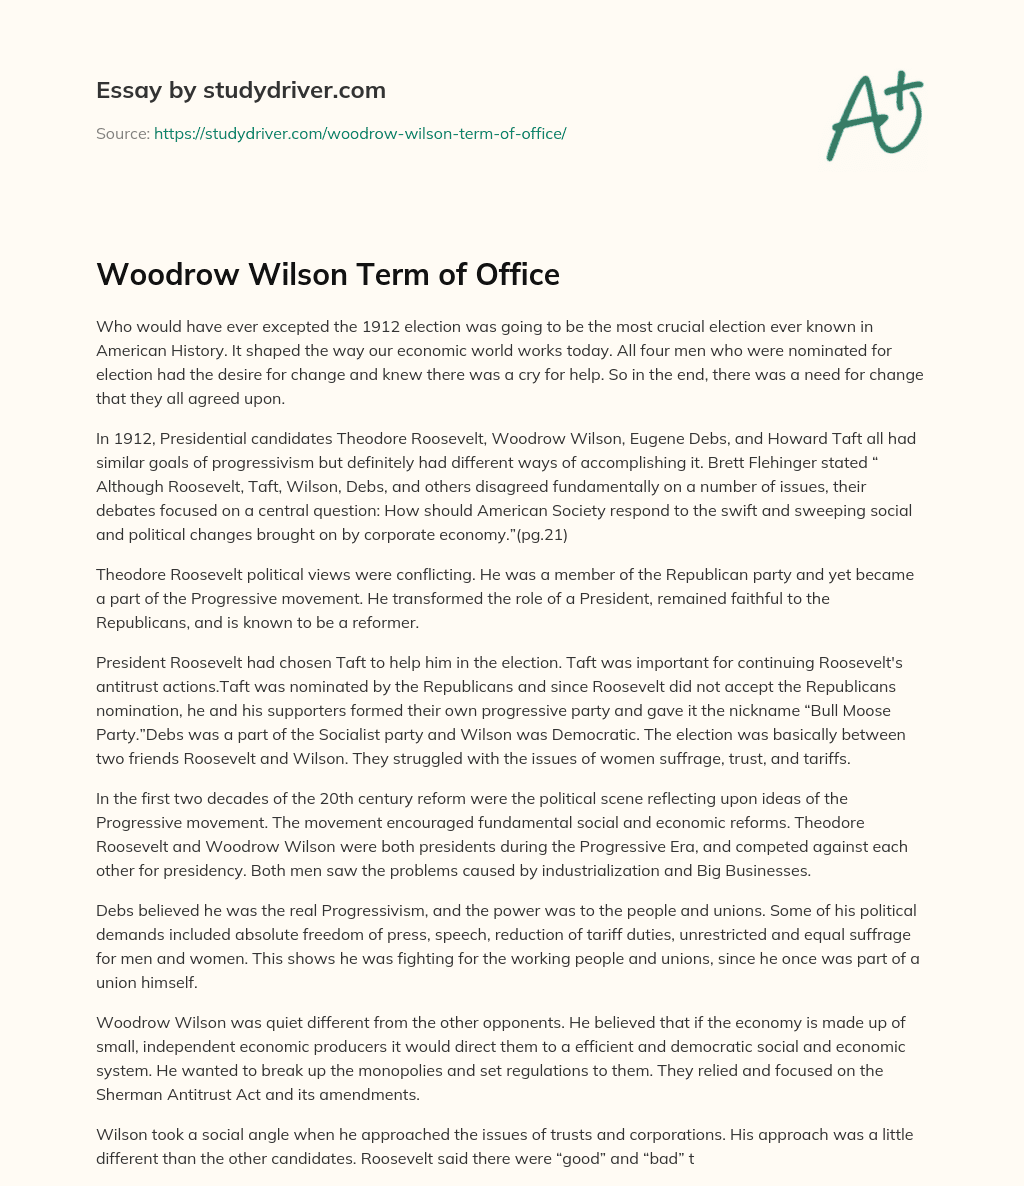 Woodrow Wilson Term of Office essay